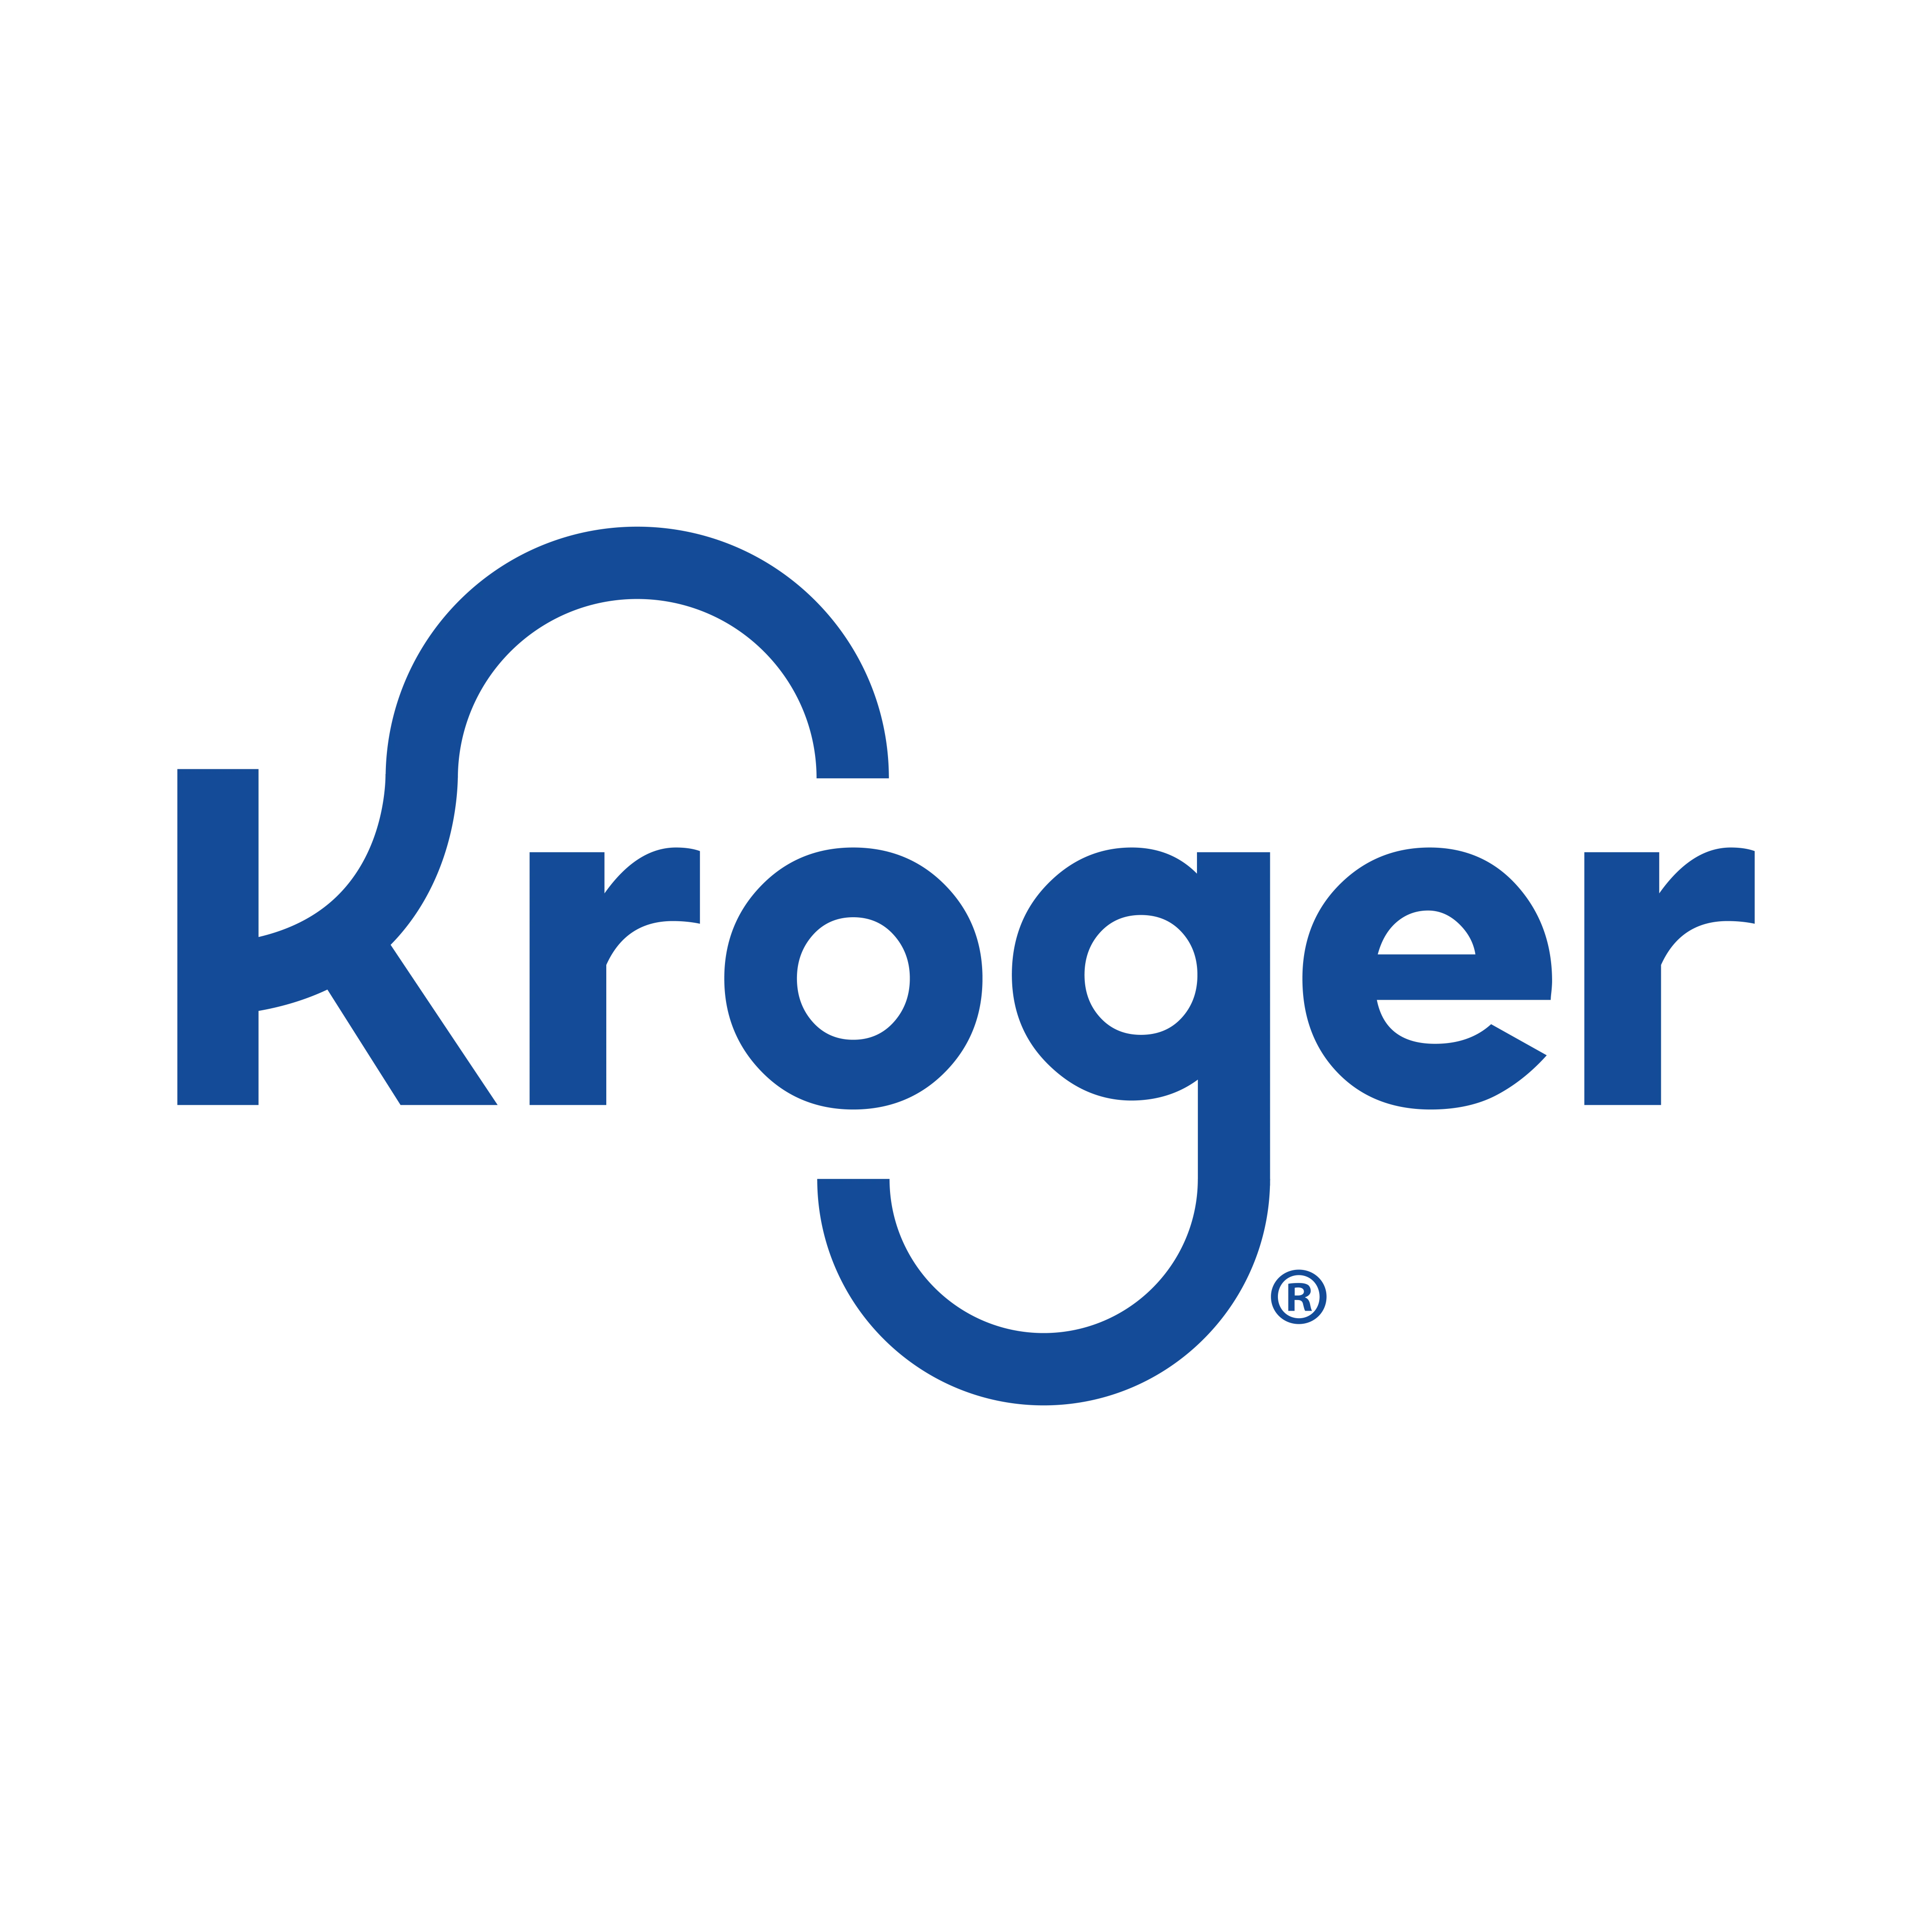 Kroger grocery store horizontal logo